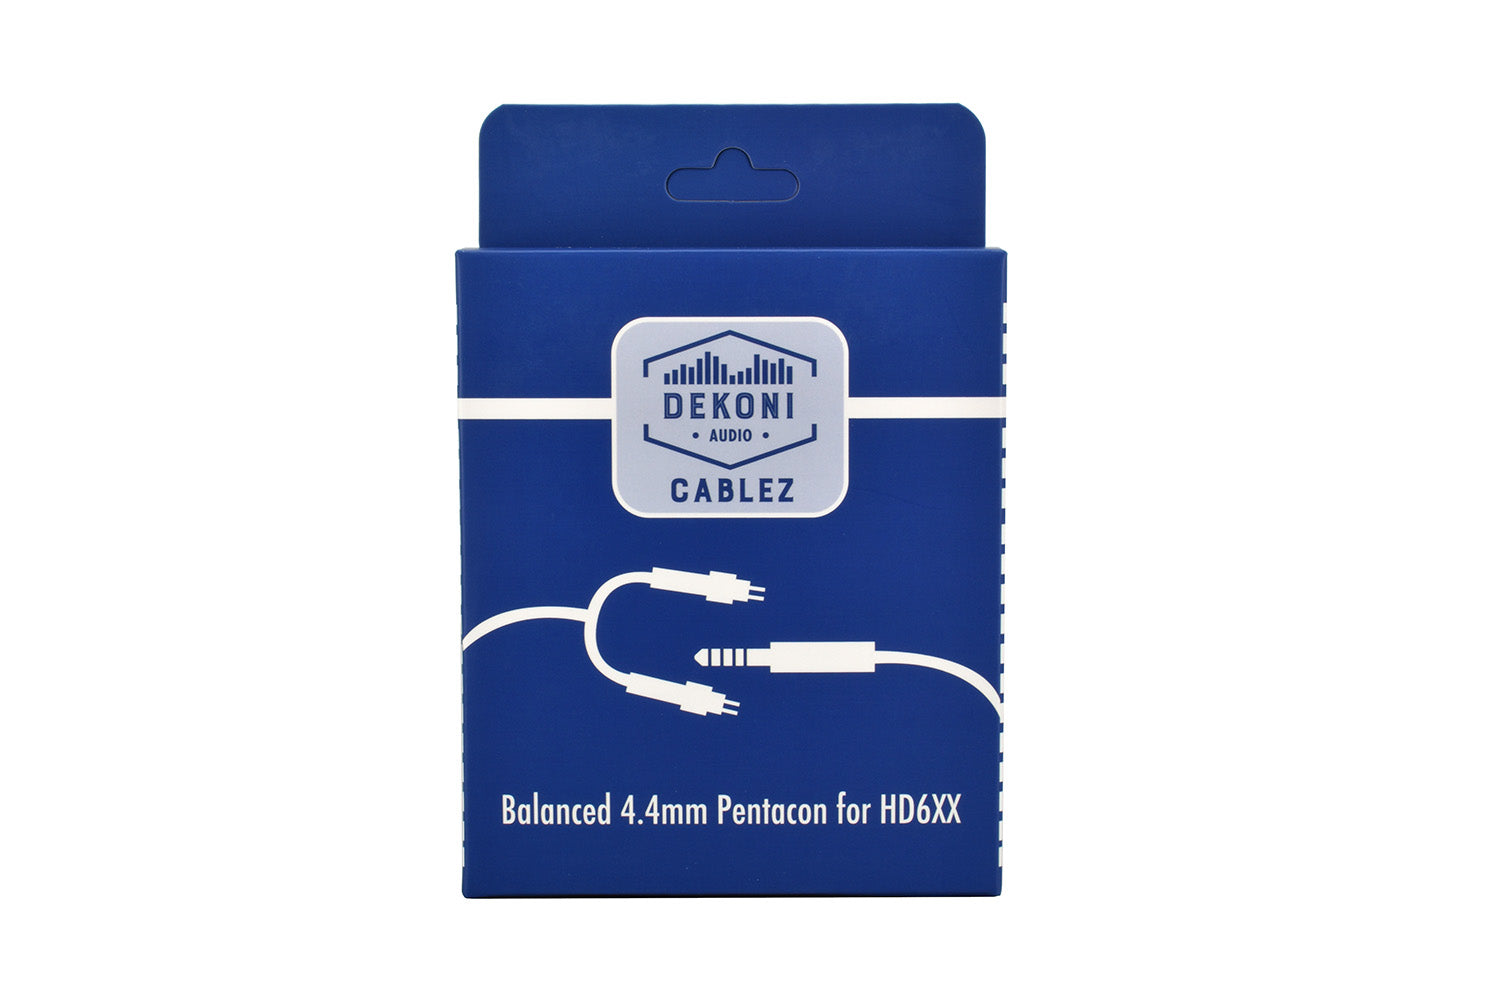 Dekoni Audio Balanced 4.4mm Pentacon Cable for Sennheiser HD600 Series Headphones – 1.2M Length